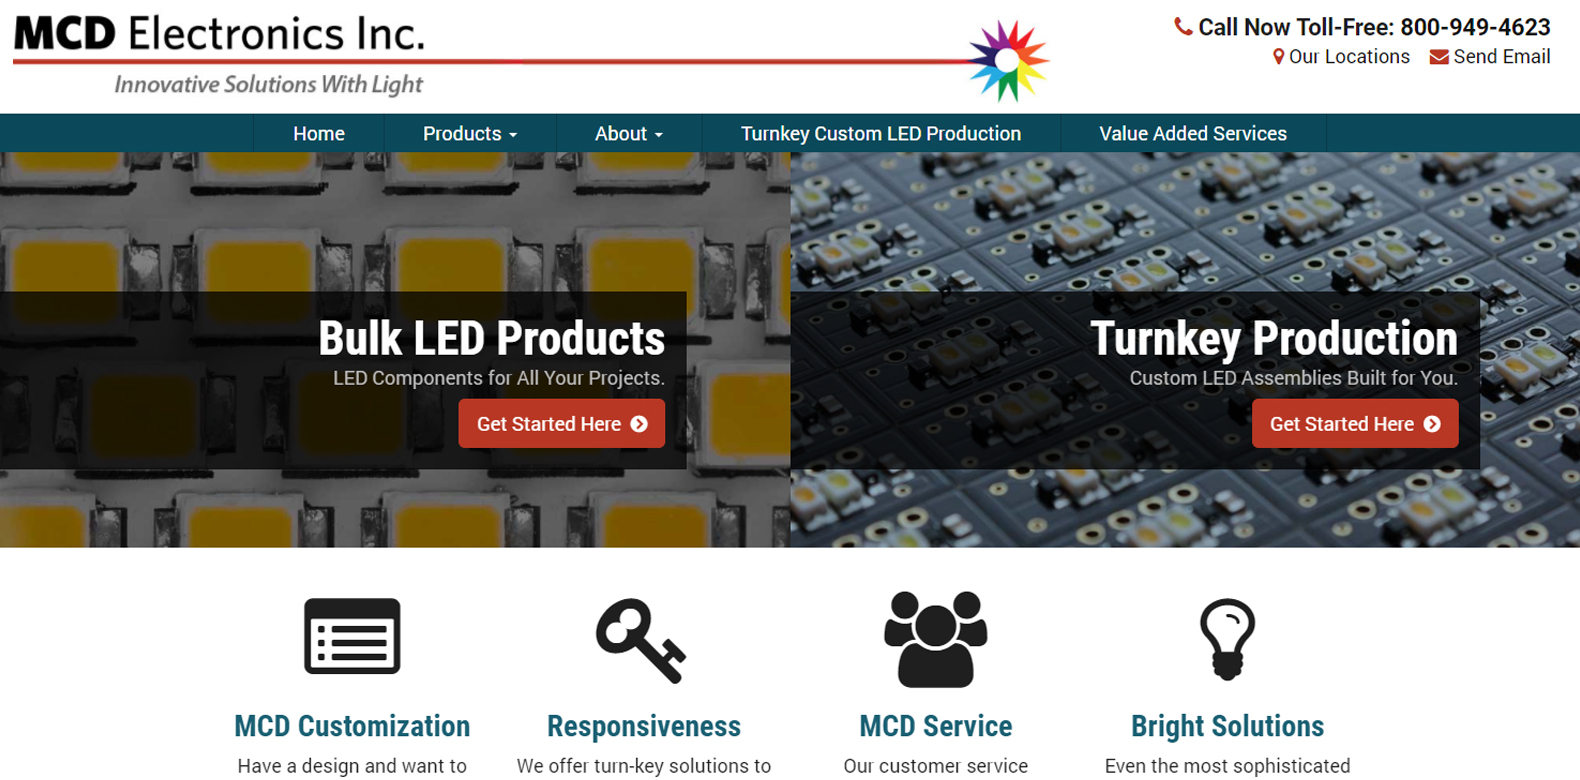 
New Website Launch: MCD Electronics